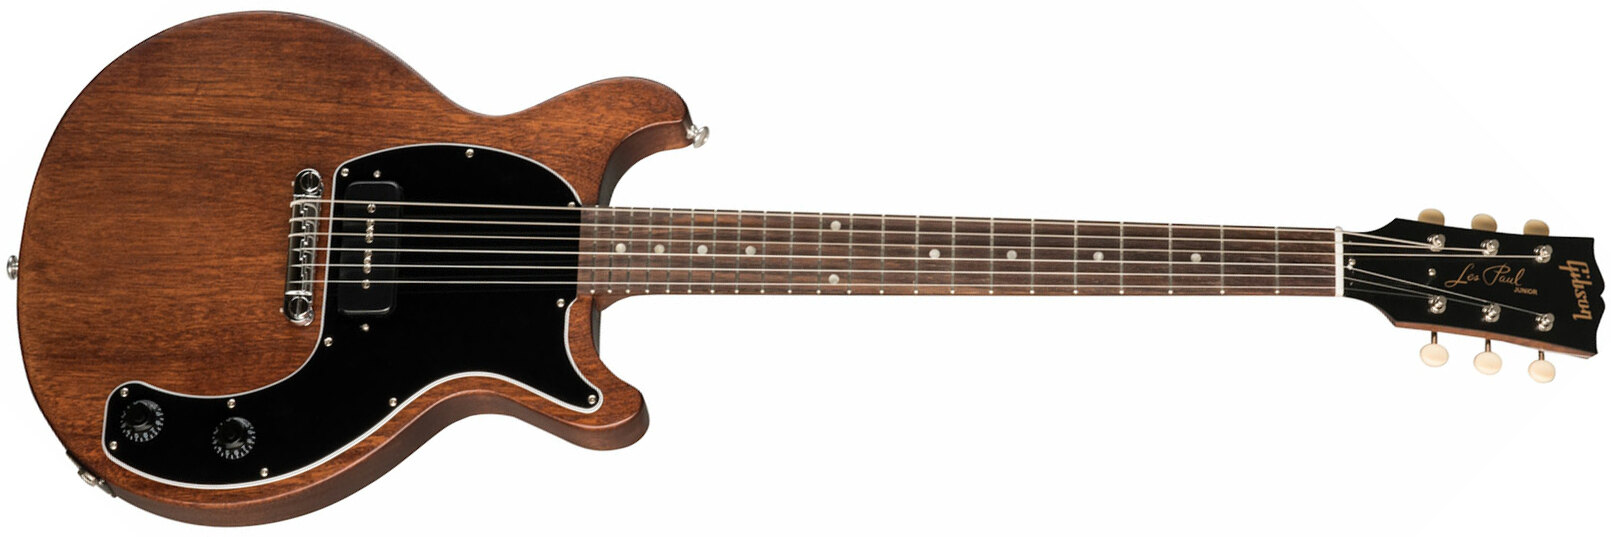 Gibson Les Paul Junior Tribute Dc Modern P90 - Worn Brown - Double cut electric guitar - Main picture